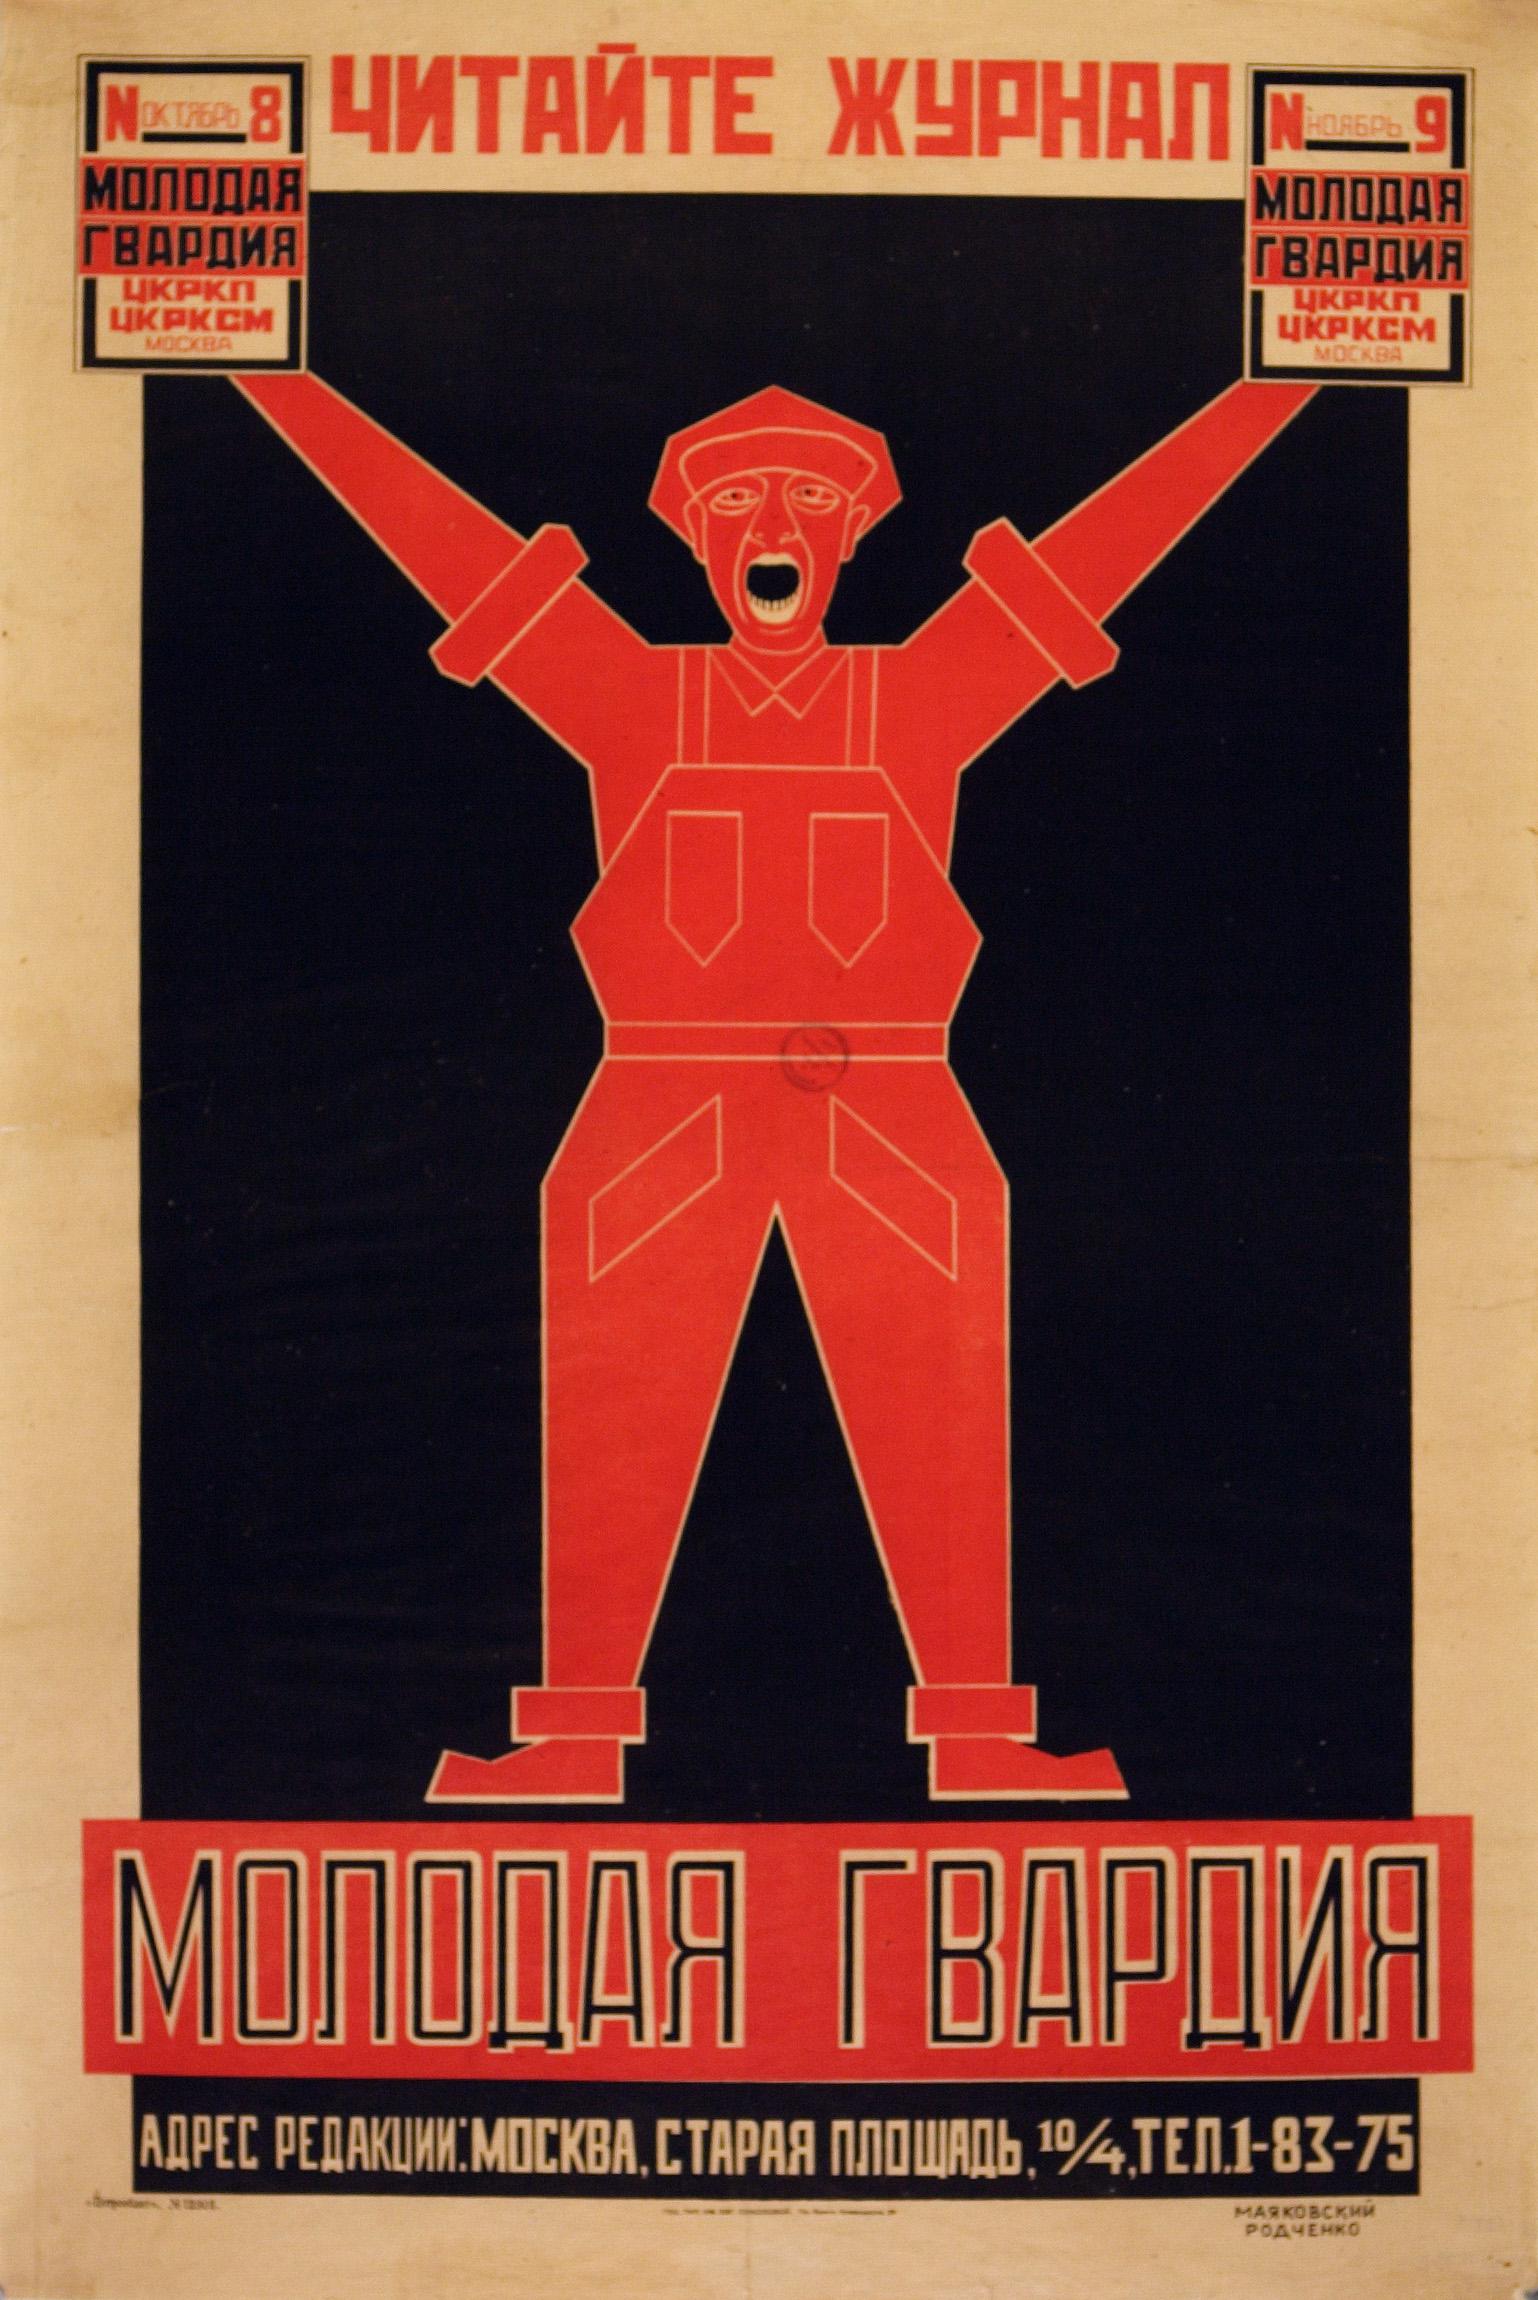 Moscow 1924 ALEXANDER RODCHENKO d1055 CPM R18 Vladimir Mayakovsky 